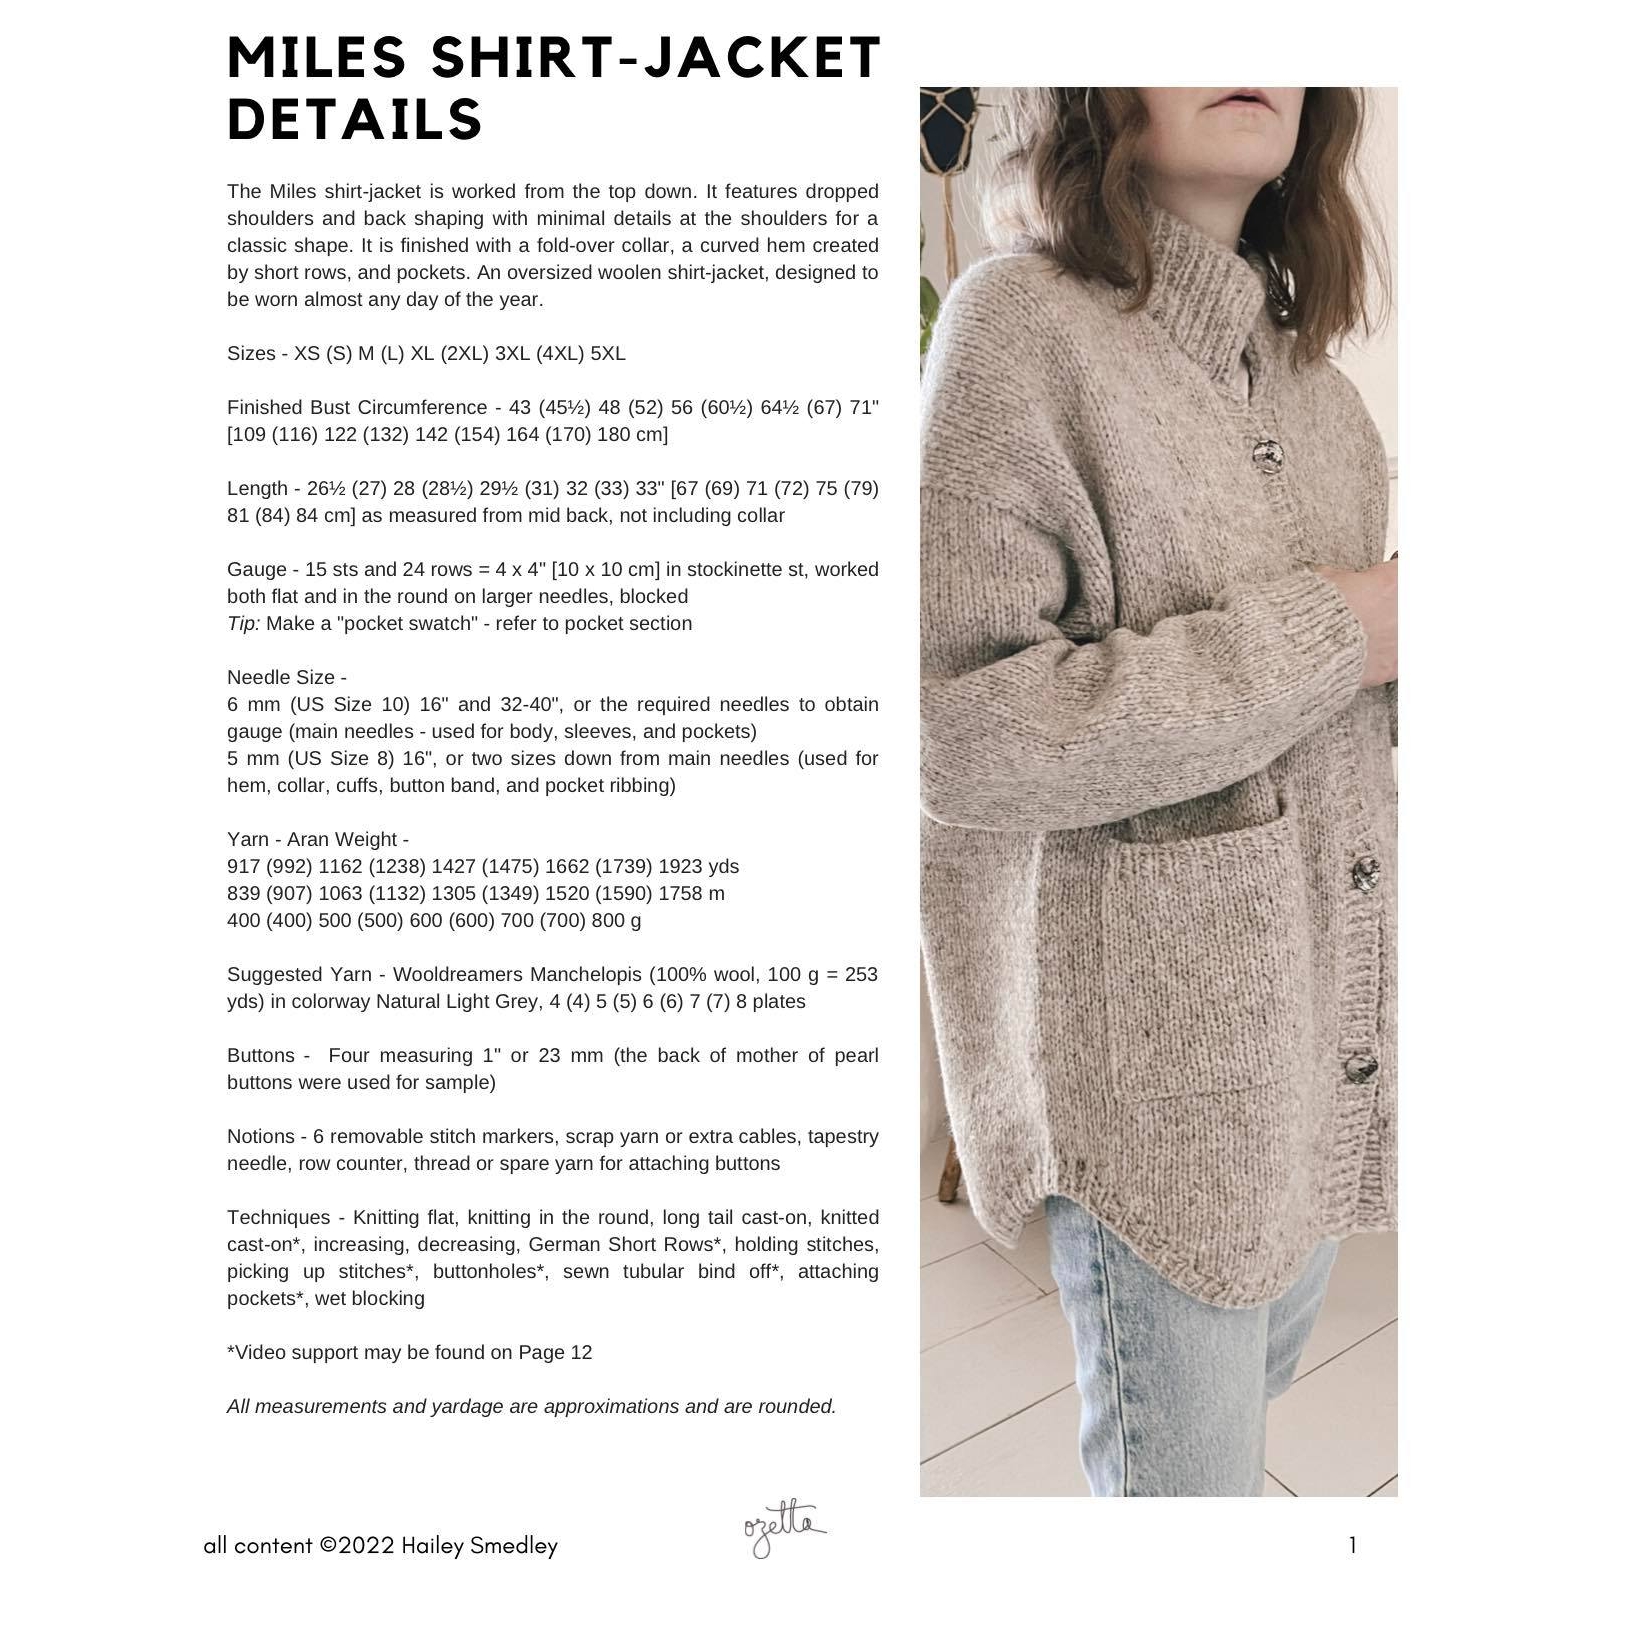 Ozetta's Miles Shirt Jacket kit in Manchelopi